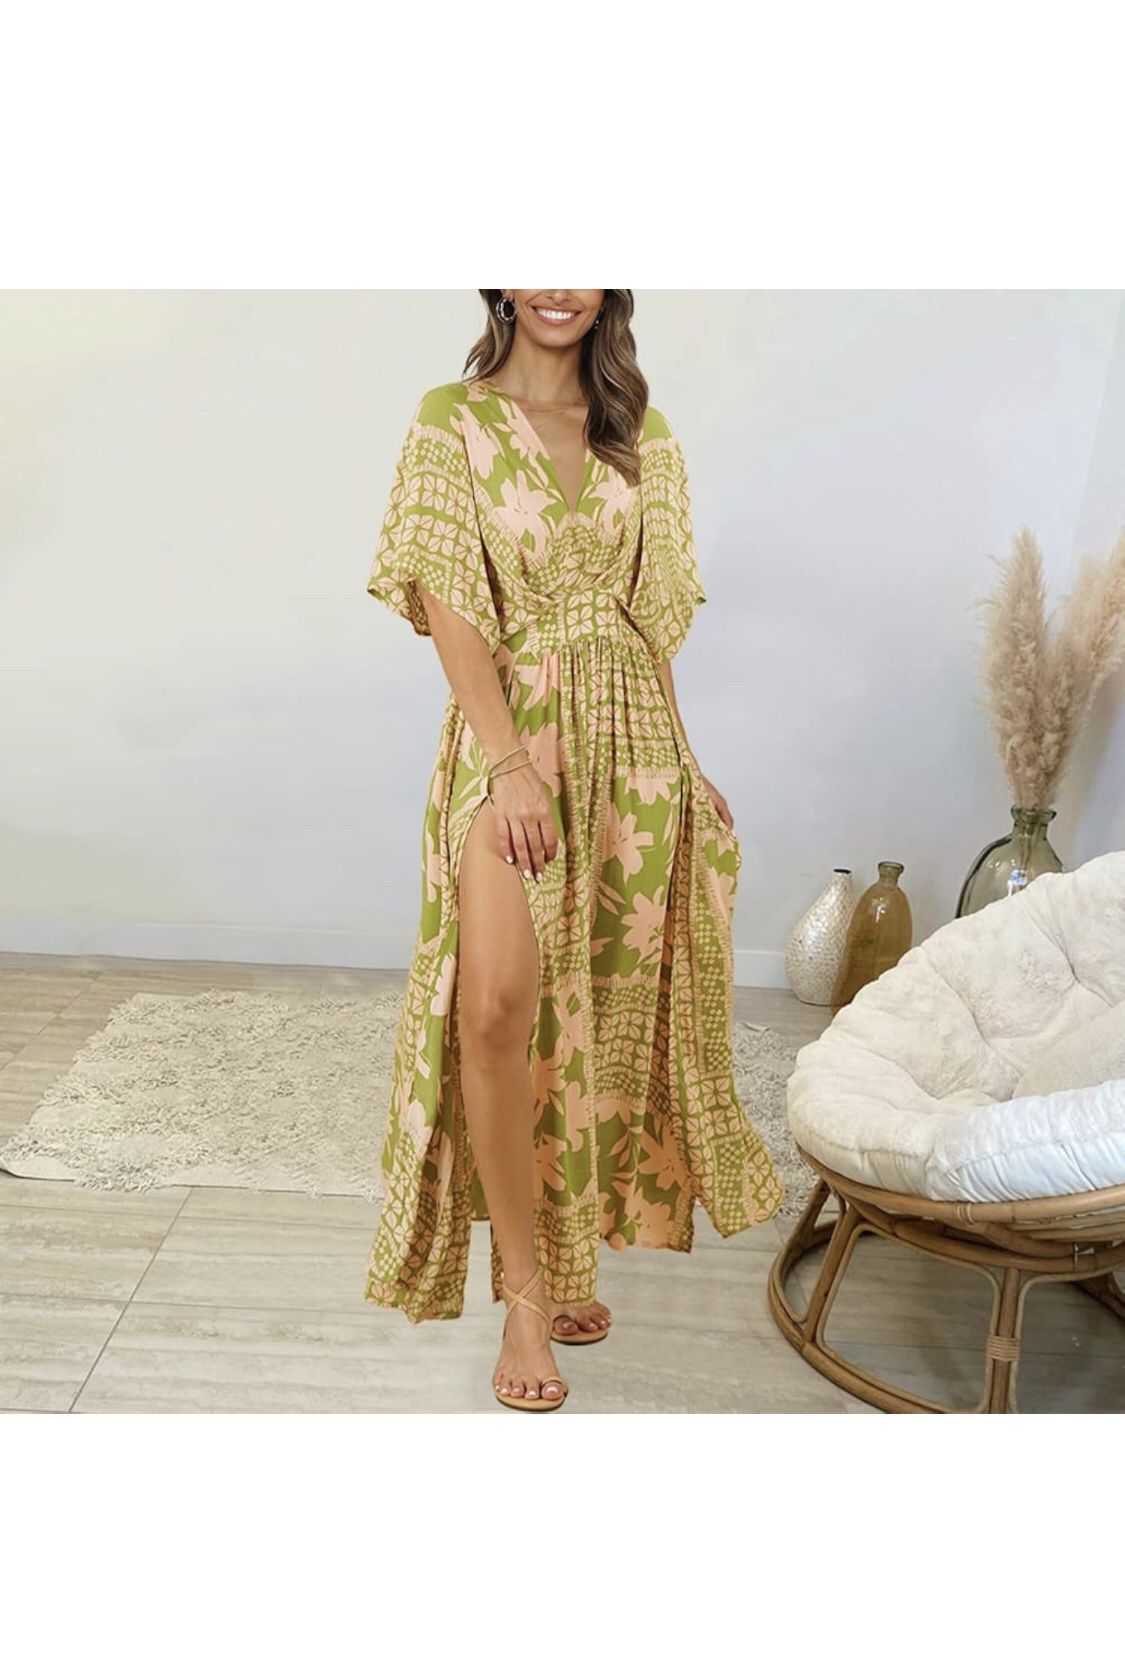 Women's Bohemian Floral Printed Wrap V Neck Short Sleeve High Split Beach Party Maxi Dress